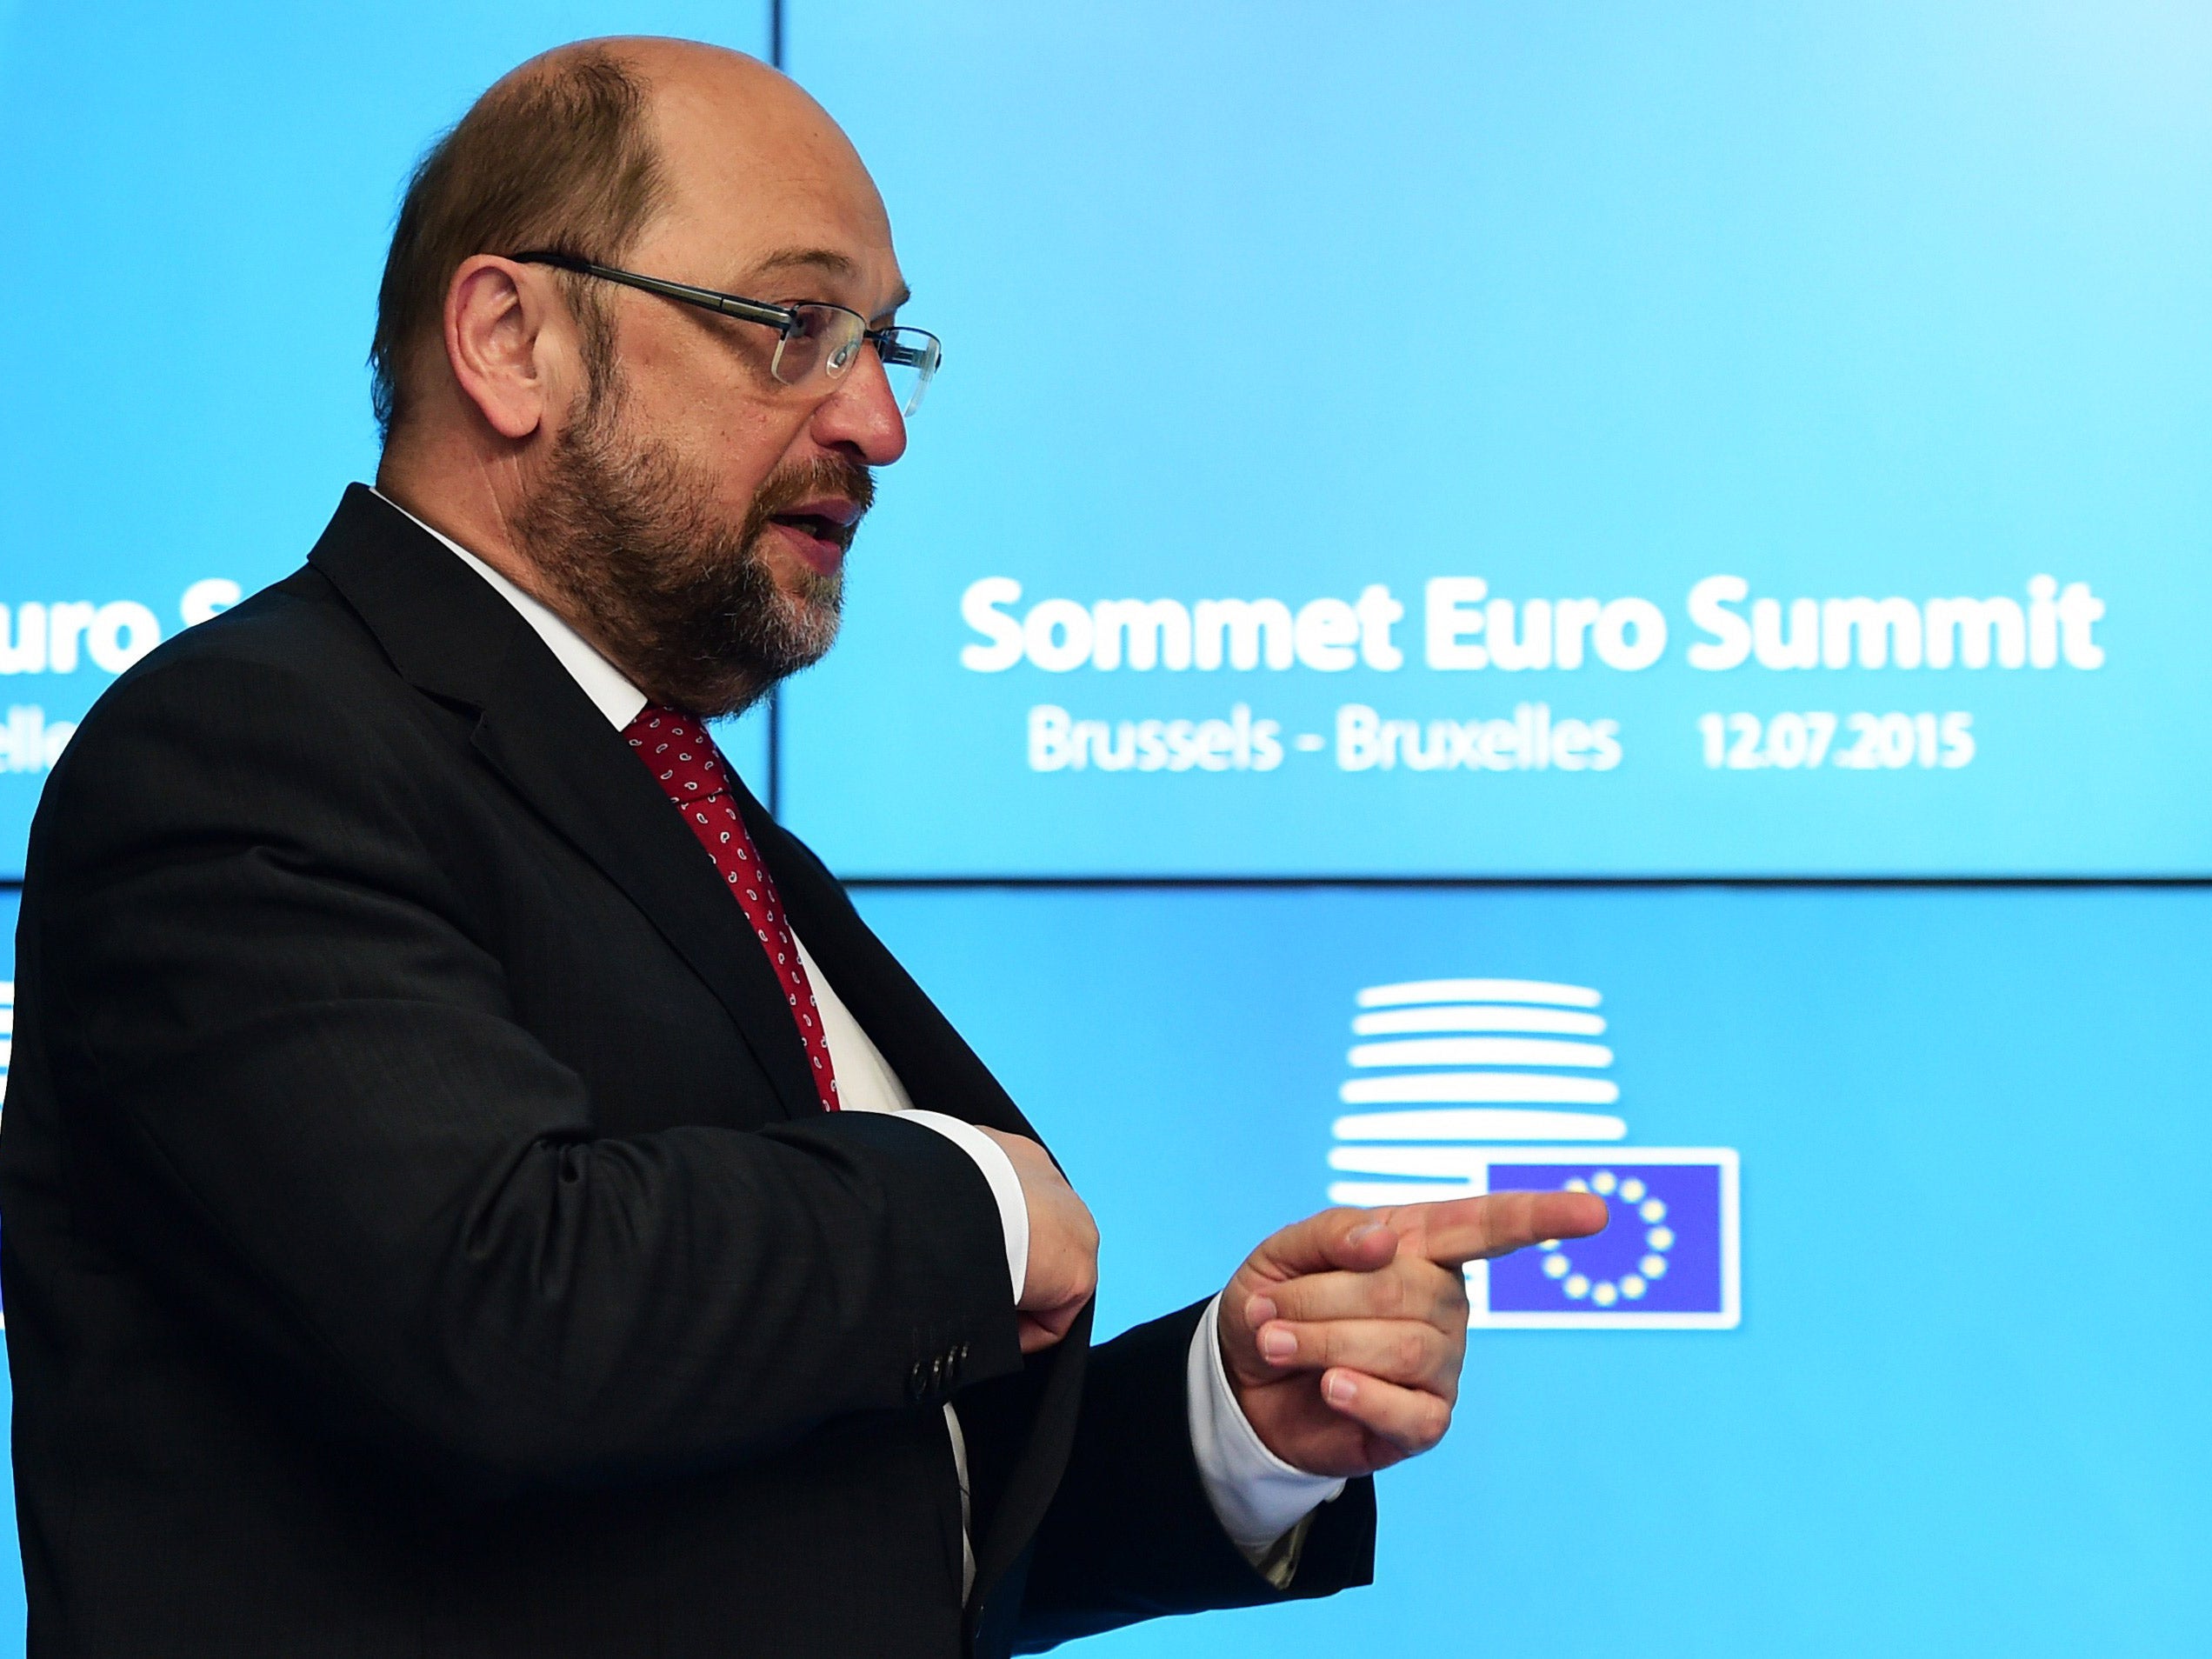 European Parliament Martin Schulz says Europe is a democracy